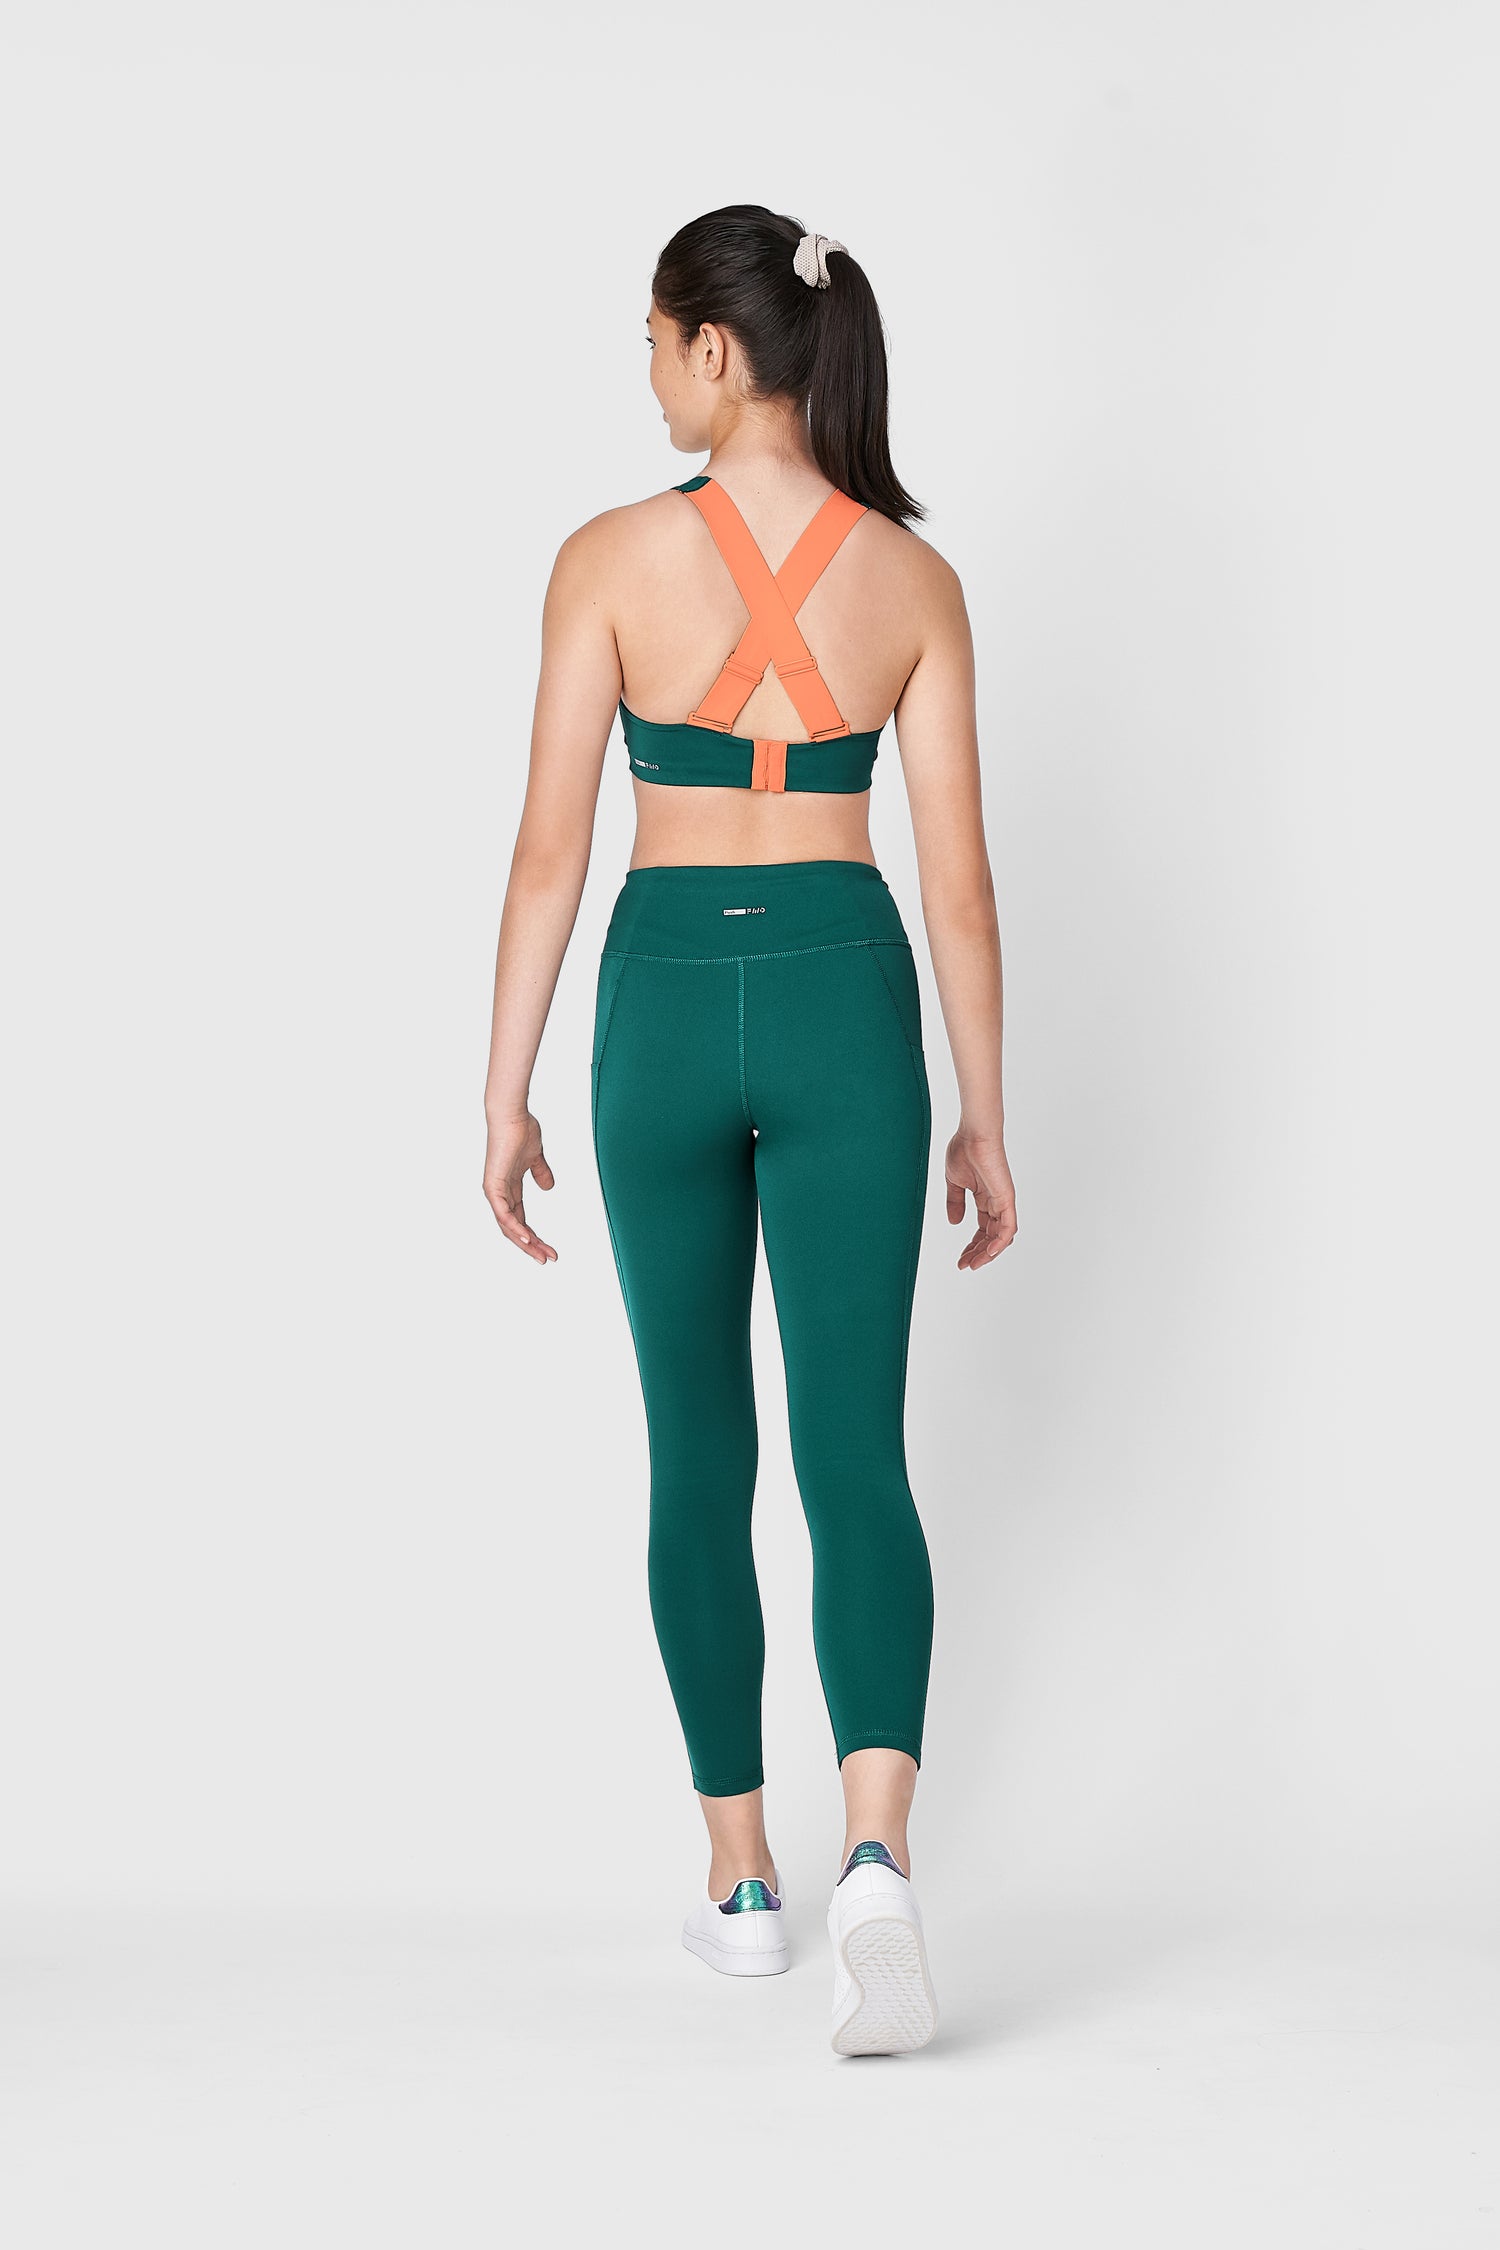 Yoga Crop Top Sports Bra With Beautiful Back Design Cotton Lycra